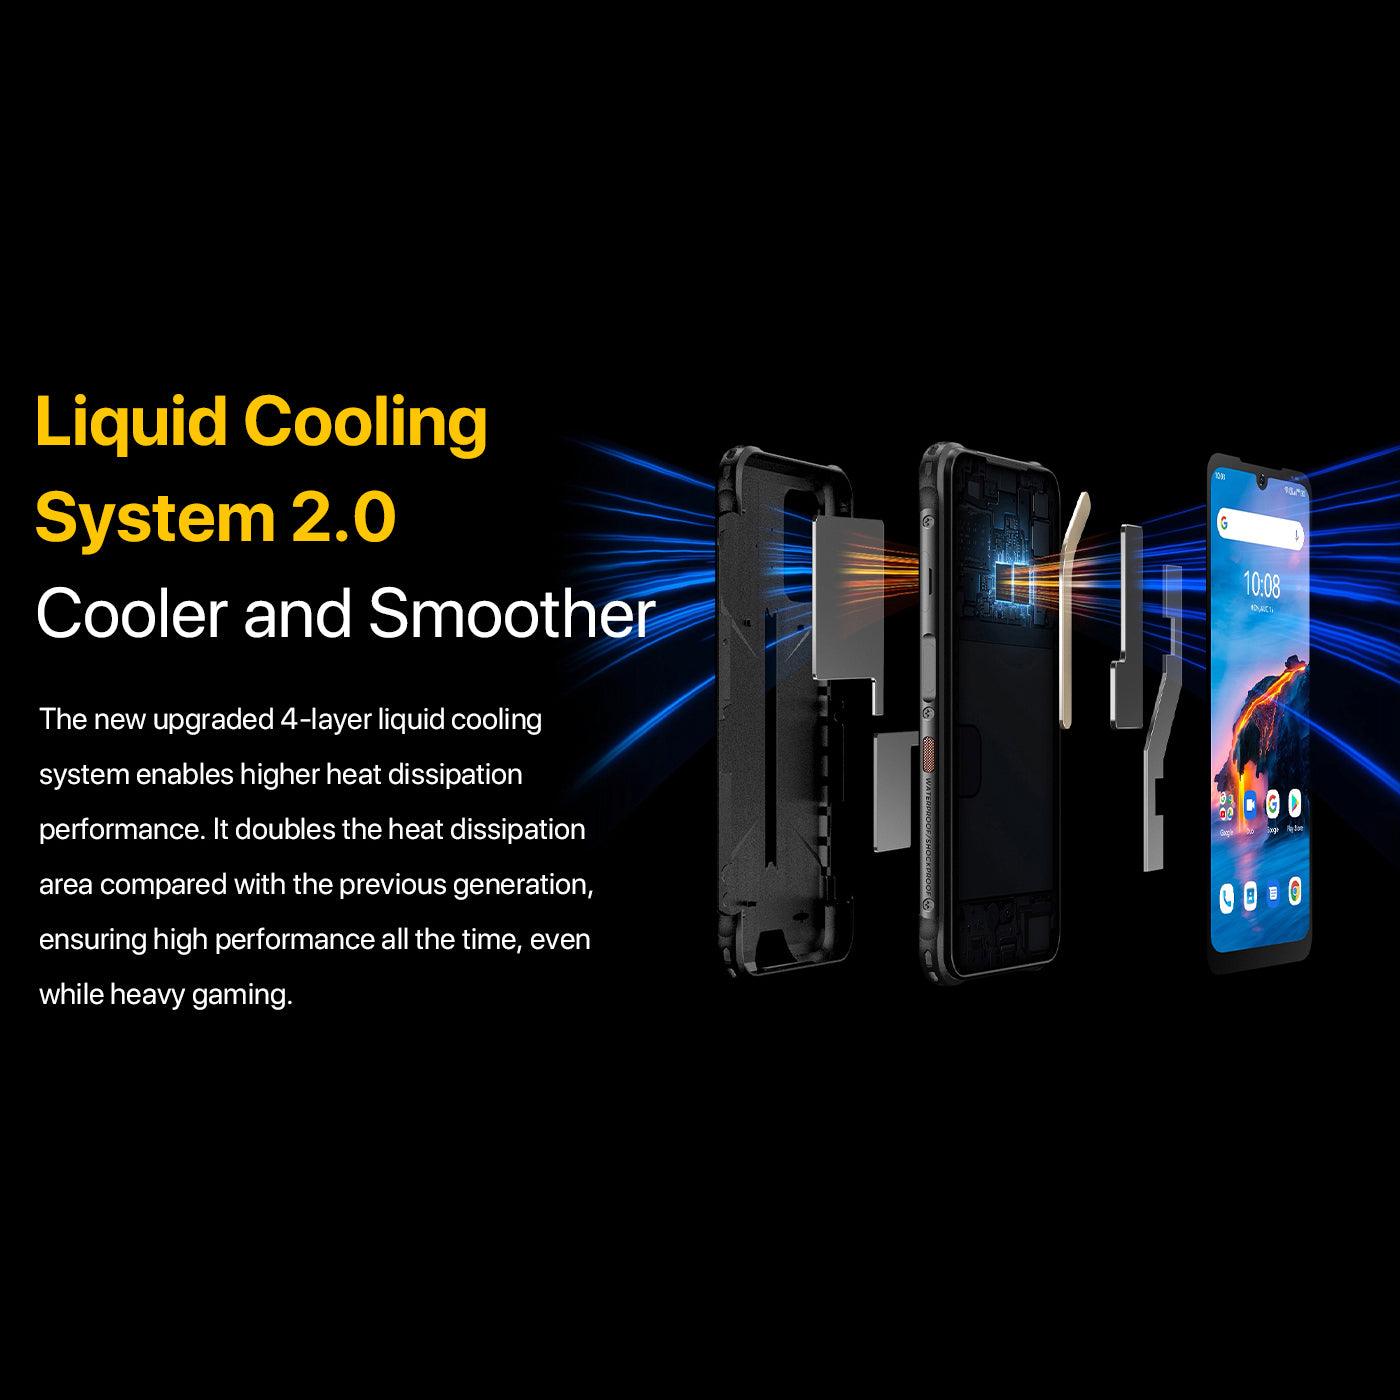 UMIDIGI Bison Pro Smartphone | Helio G80 NFC | 48MP Triple Camera | 6.3” FHD+ Display | 5000mAh Battery - dealskart.com.au